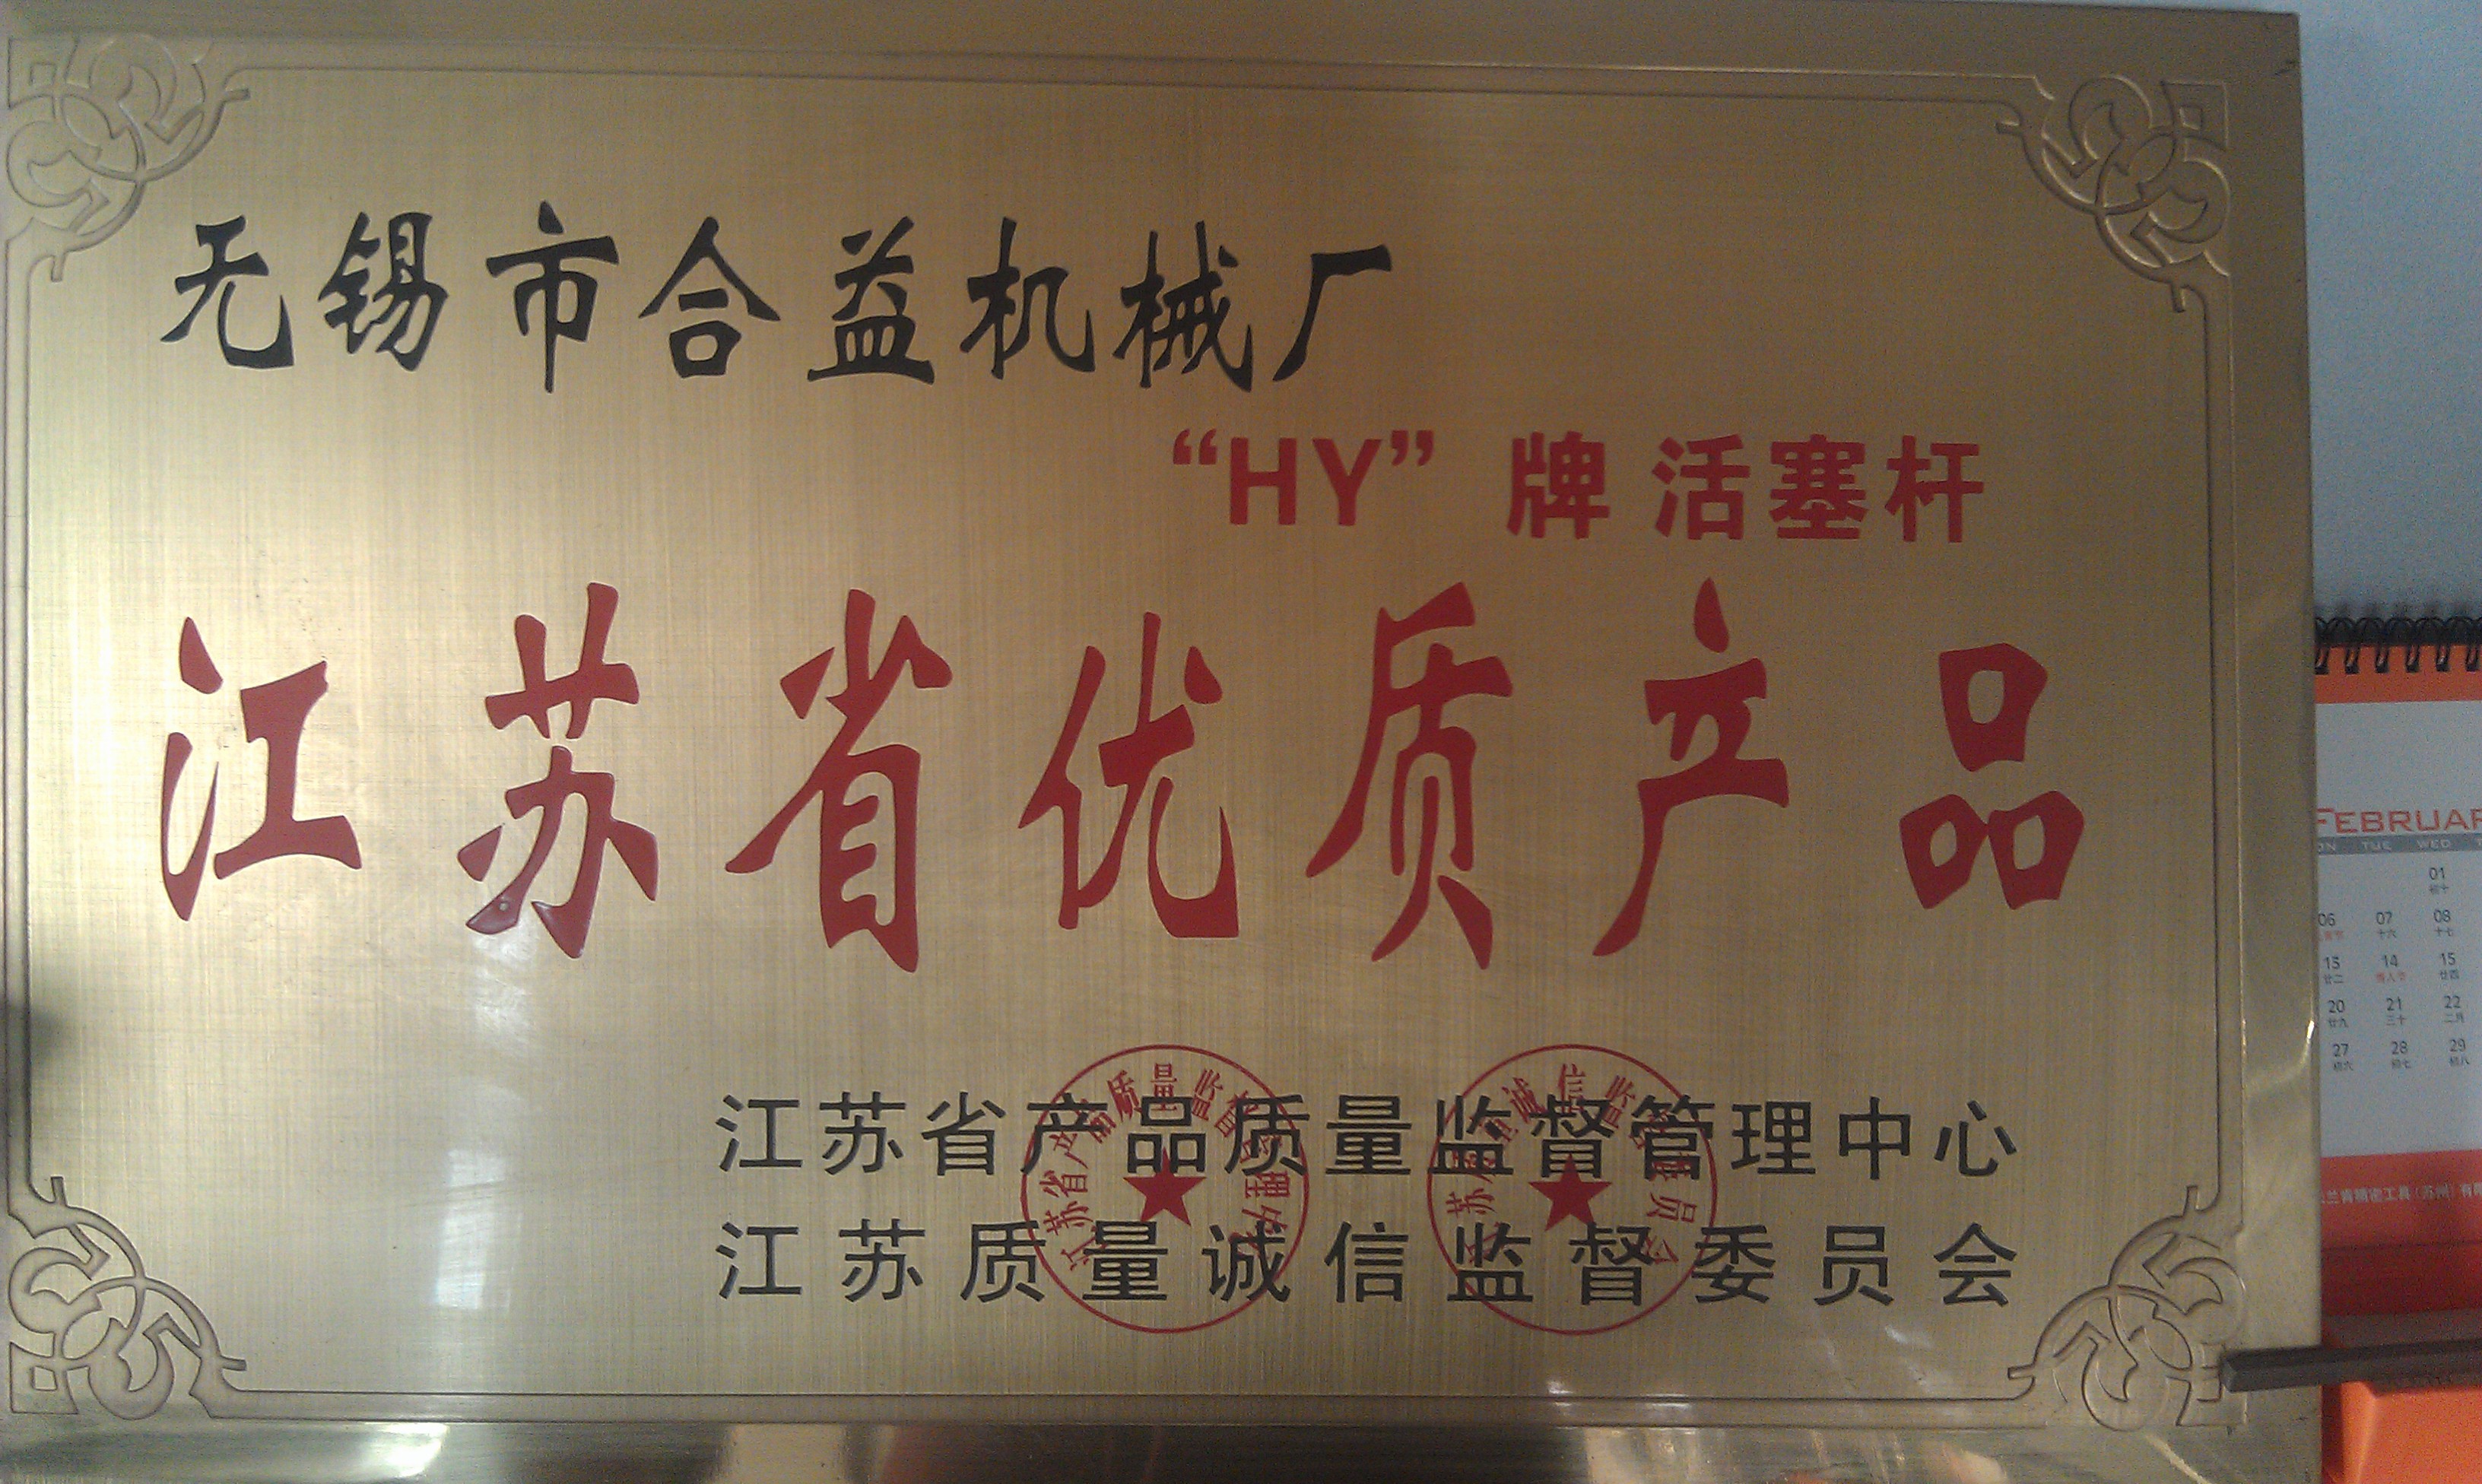 La Chine Jiangsu New Heyi Machinery Co., Ltd Certifications